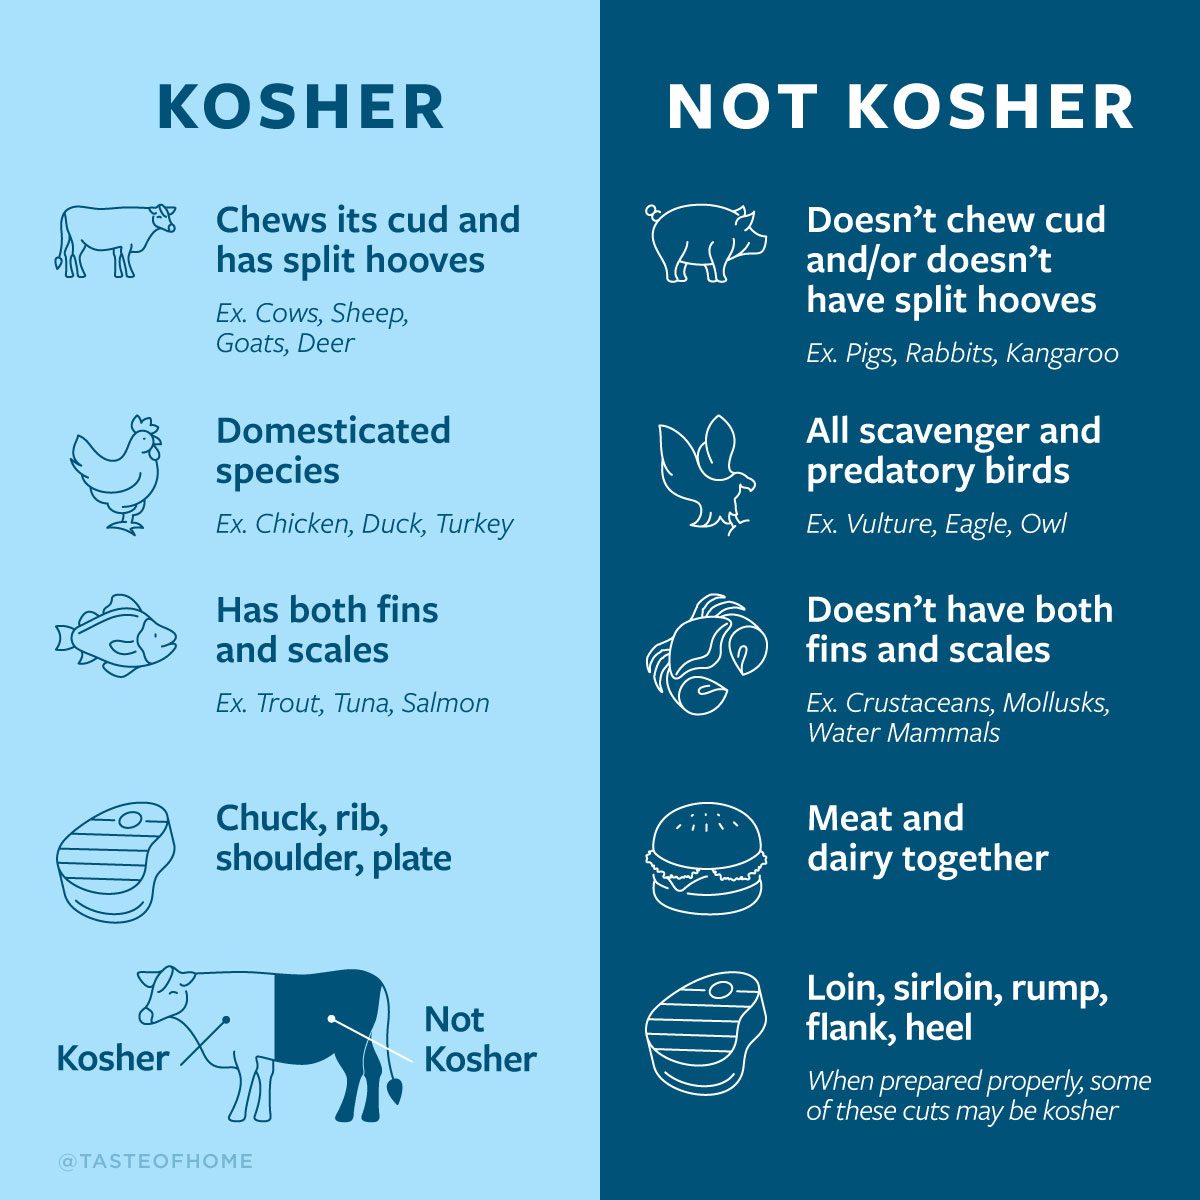 Kosher Salt: I Don't Eat Pork - Jewcy